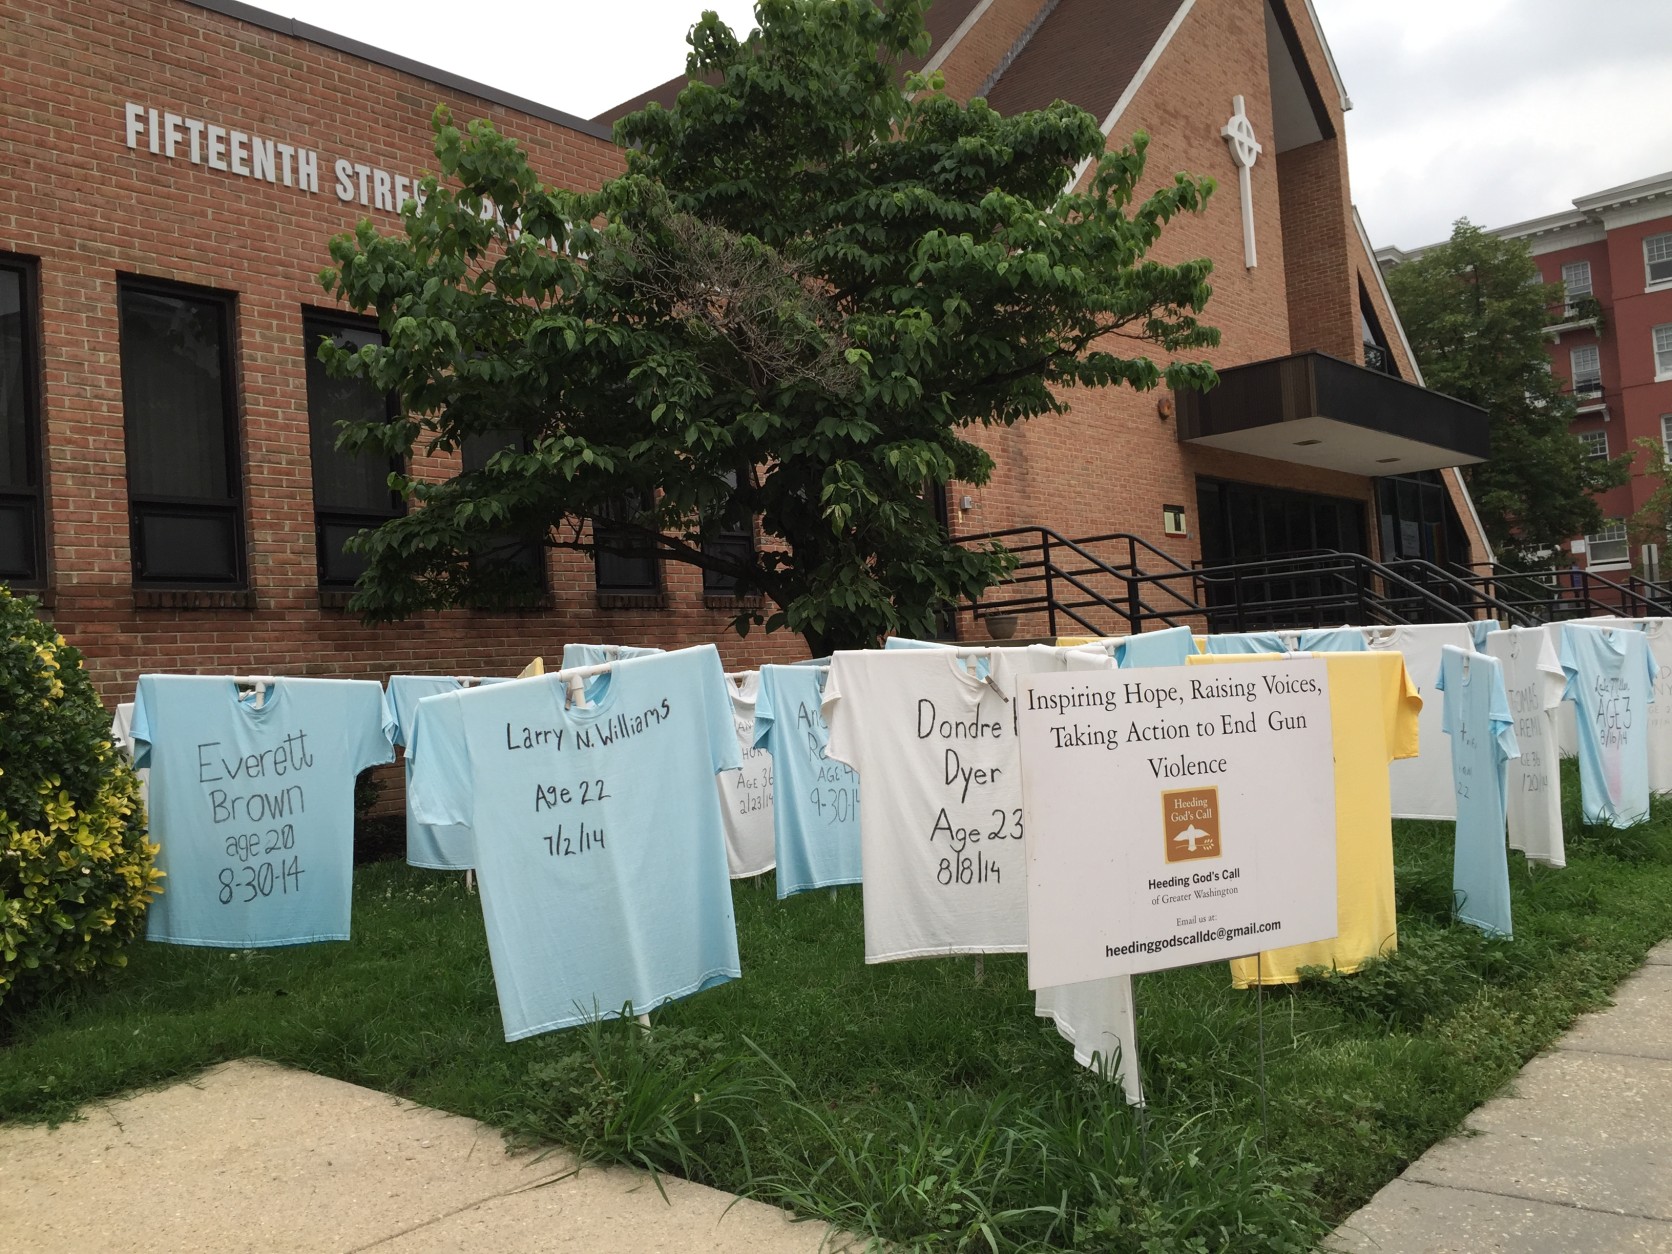 The shirts at 15th Street Presbyterian Church honoer those killed by gun violence. (WTOP/Andrew Mollenbeck)